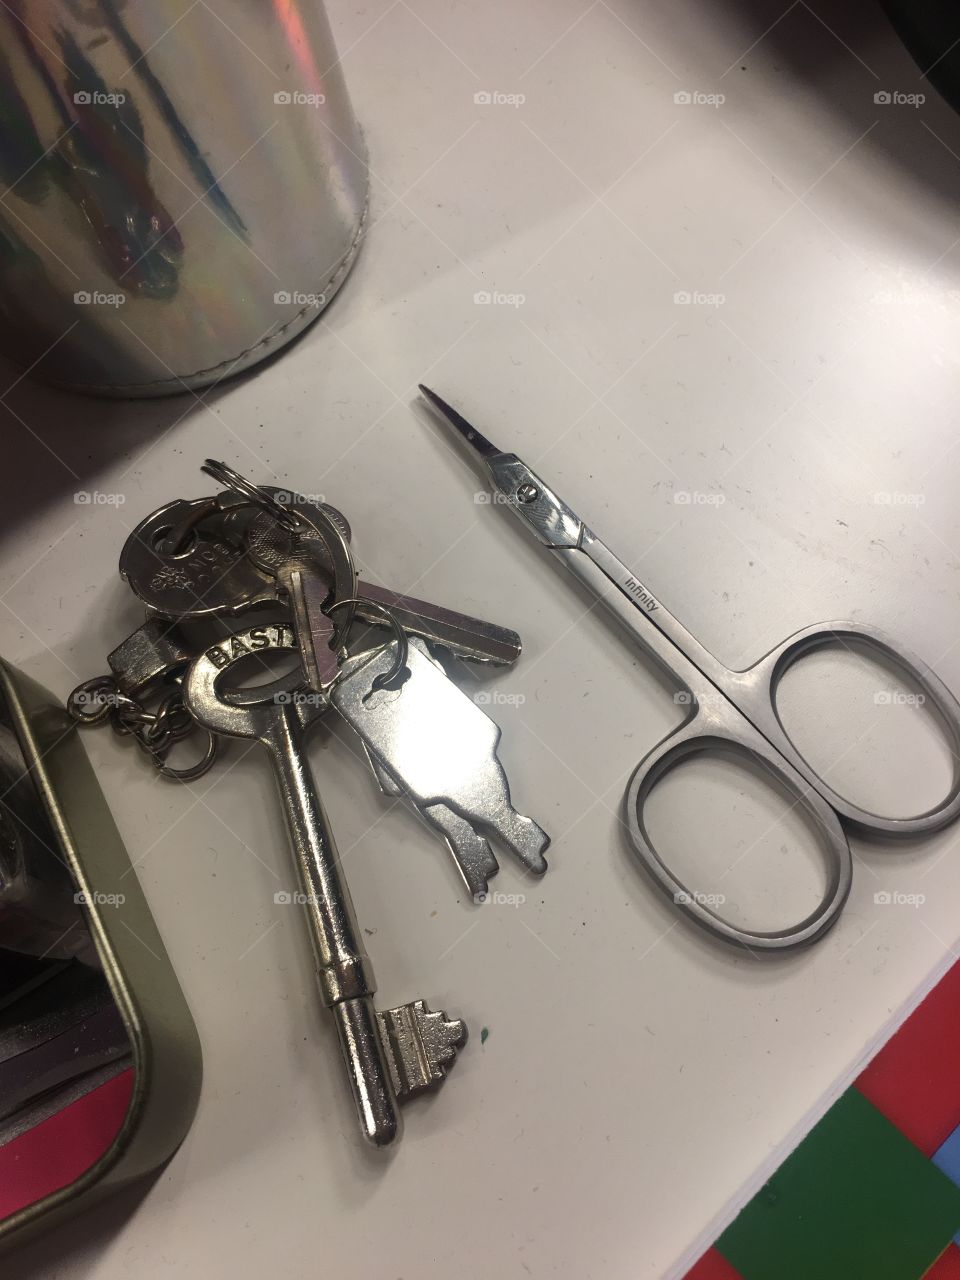 My keys and scissors 